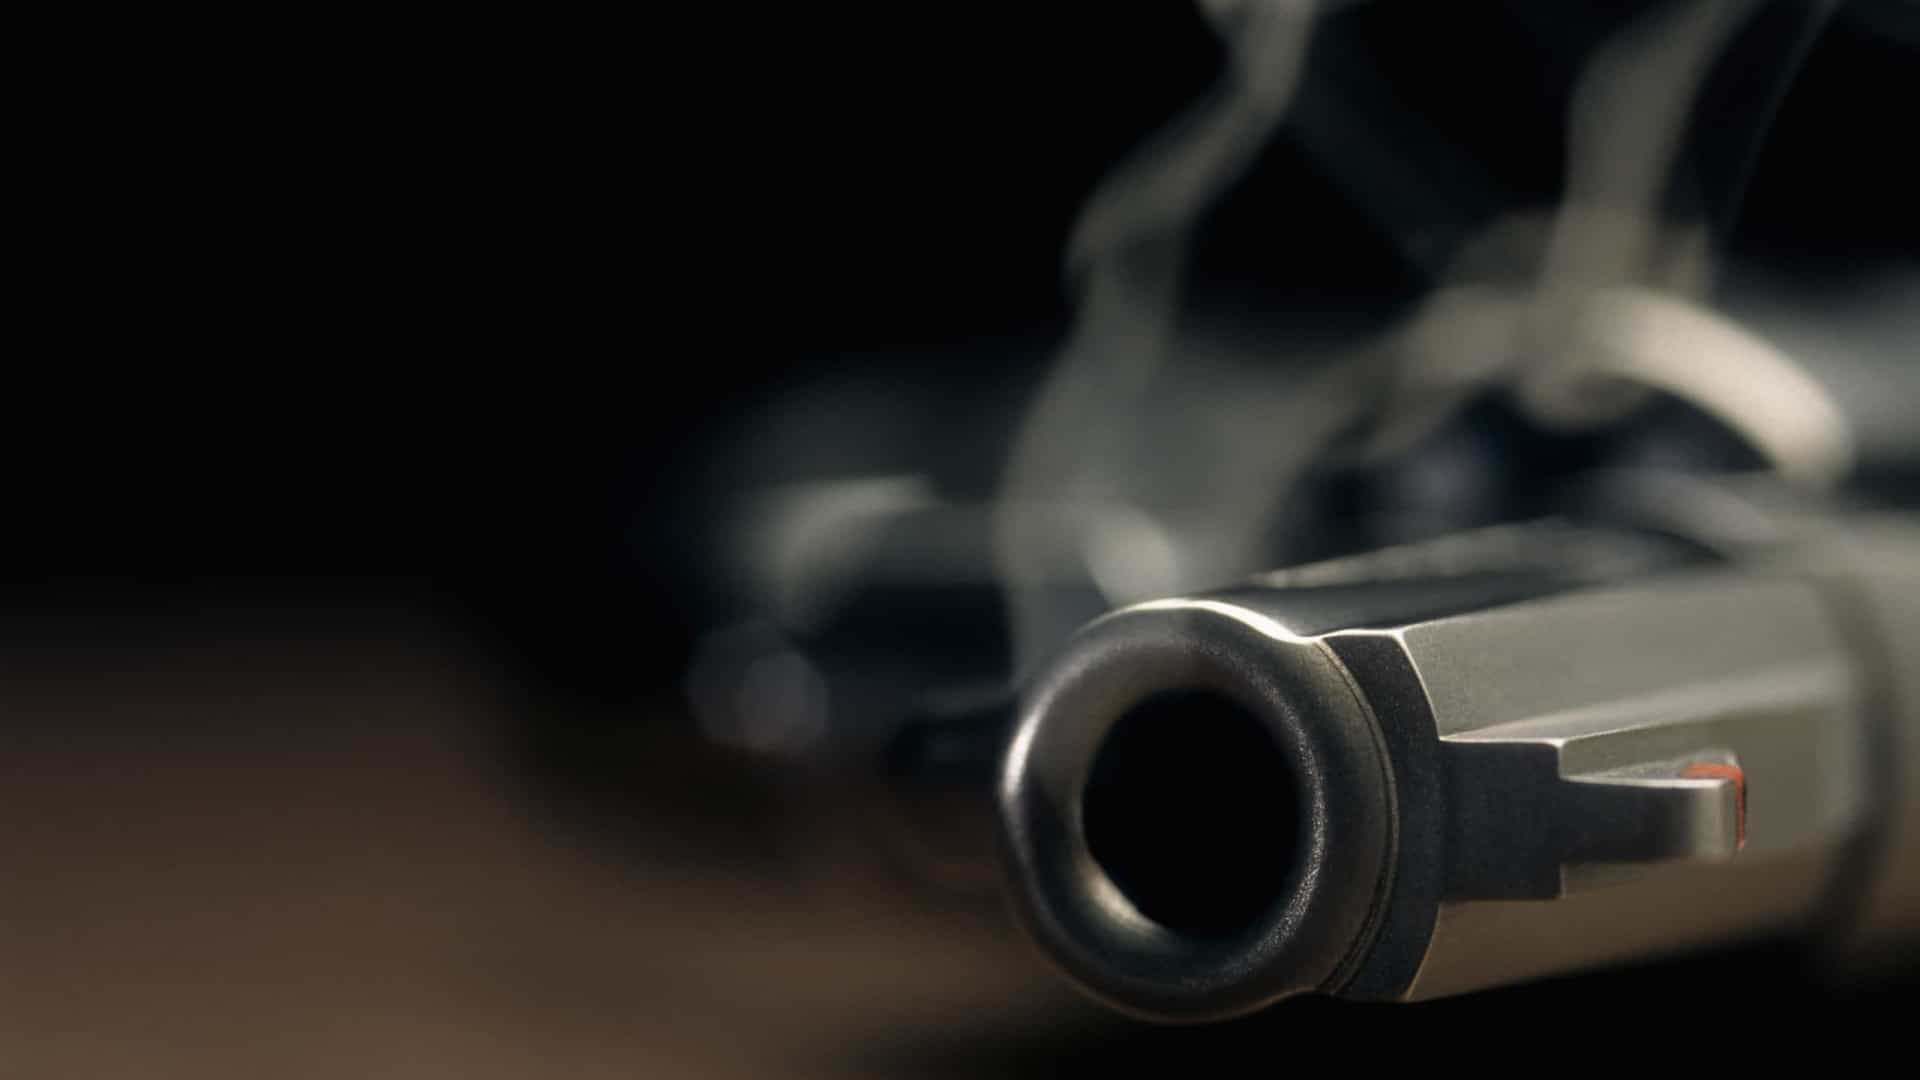 arma revolver tiro